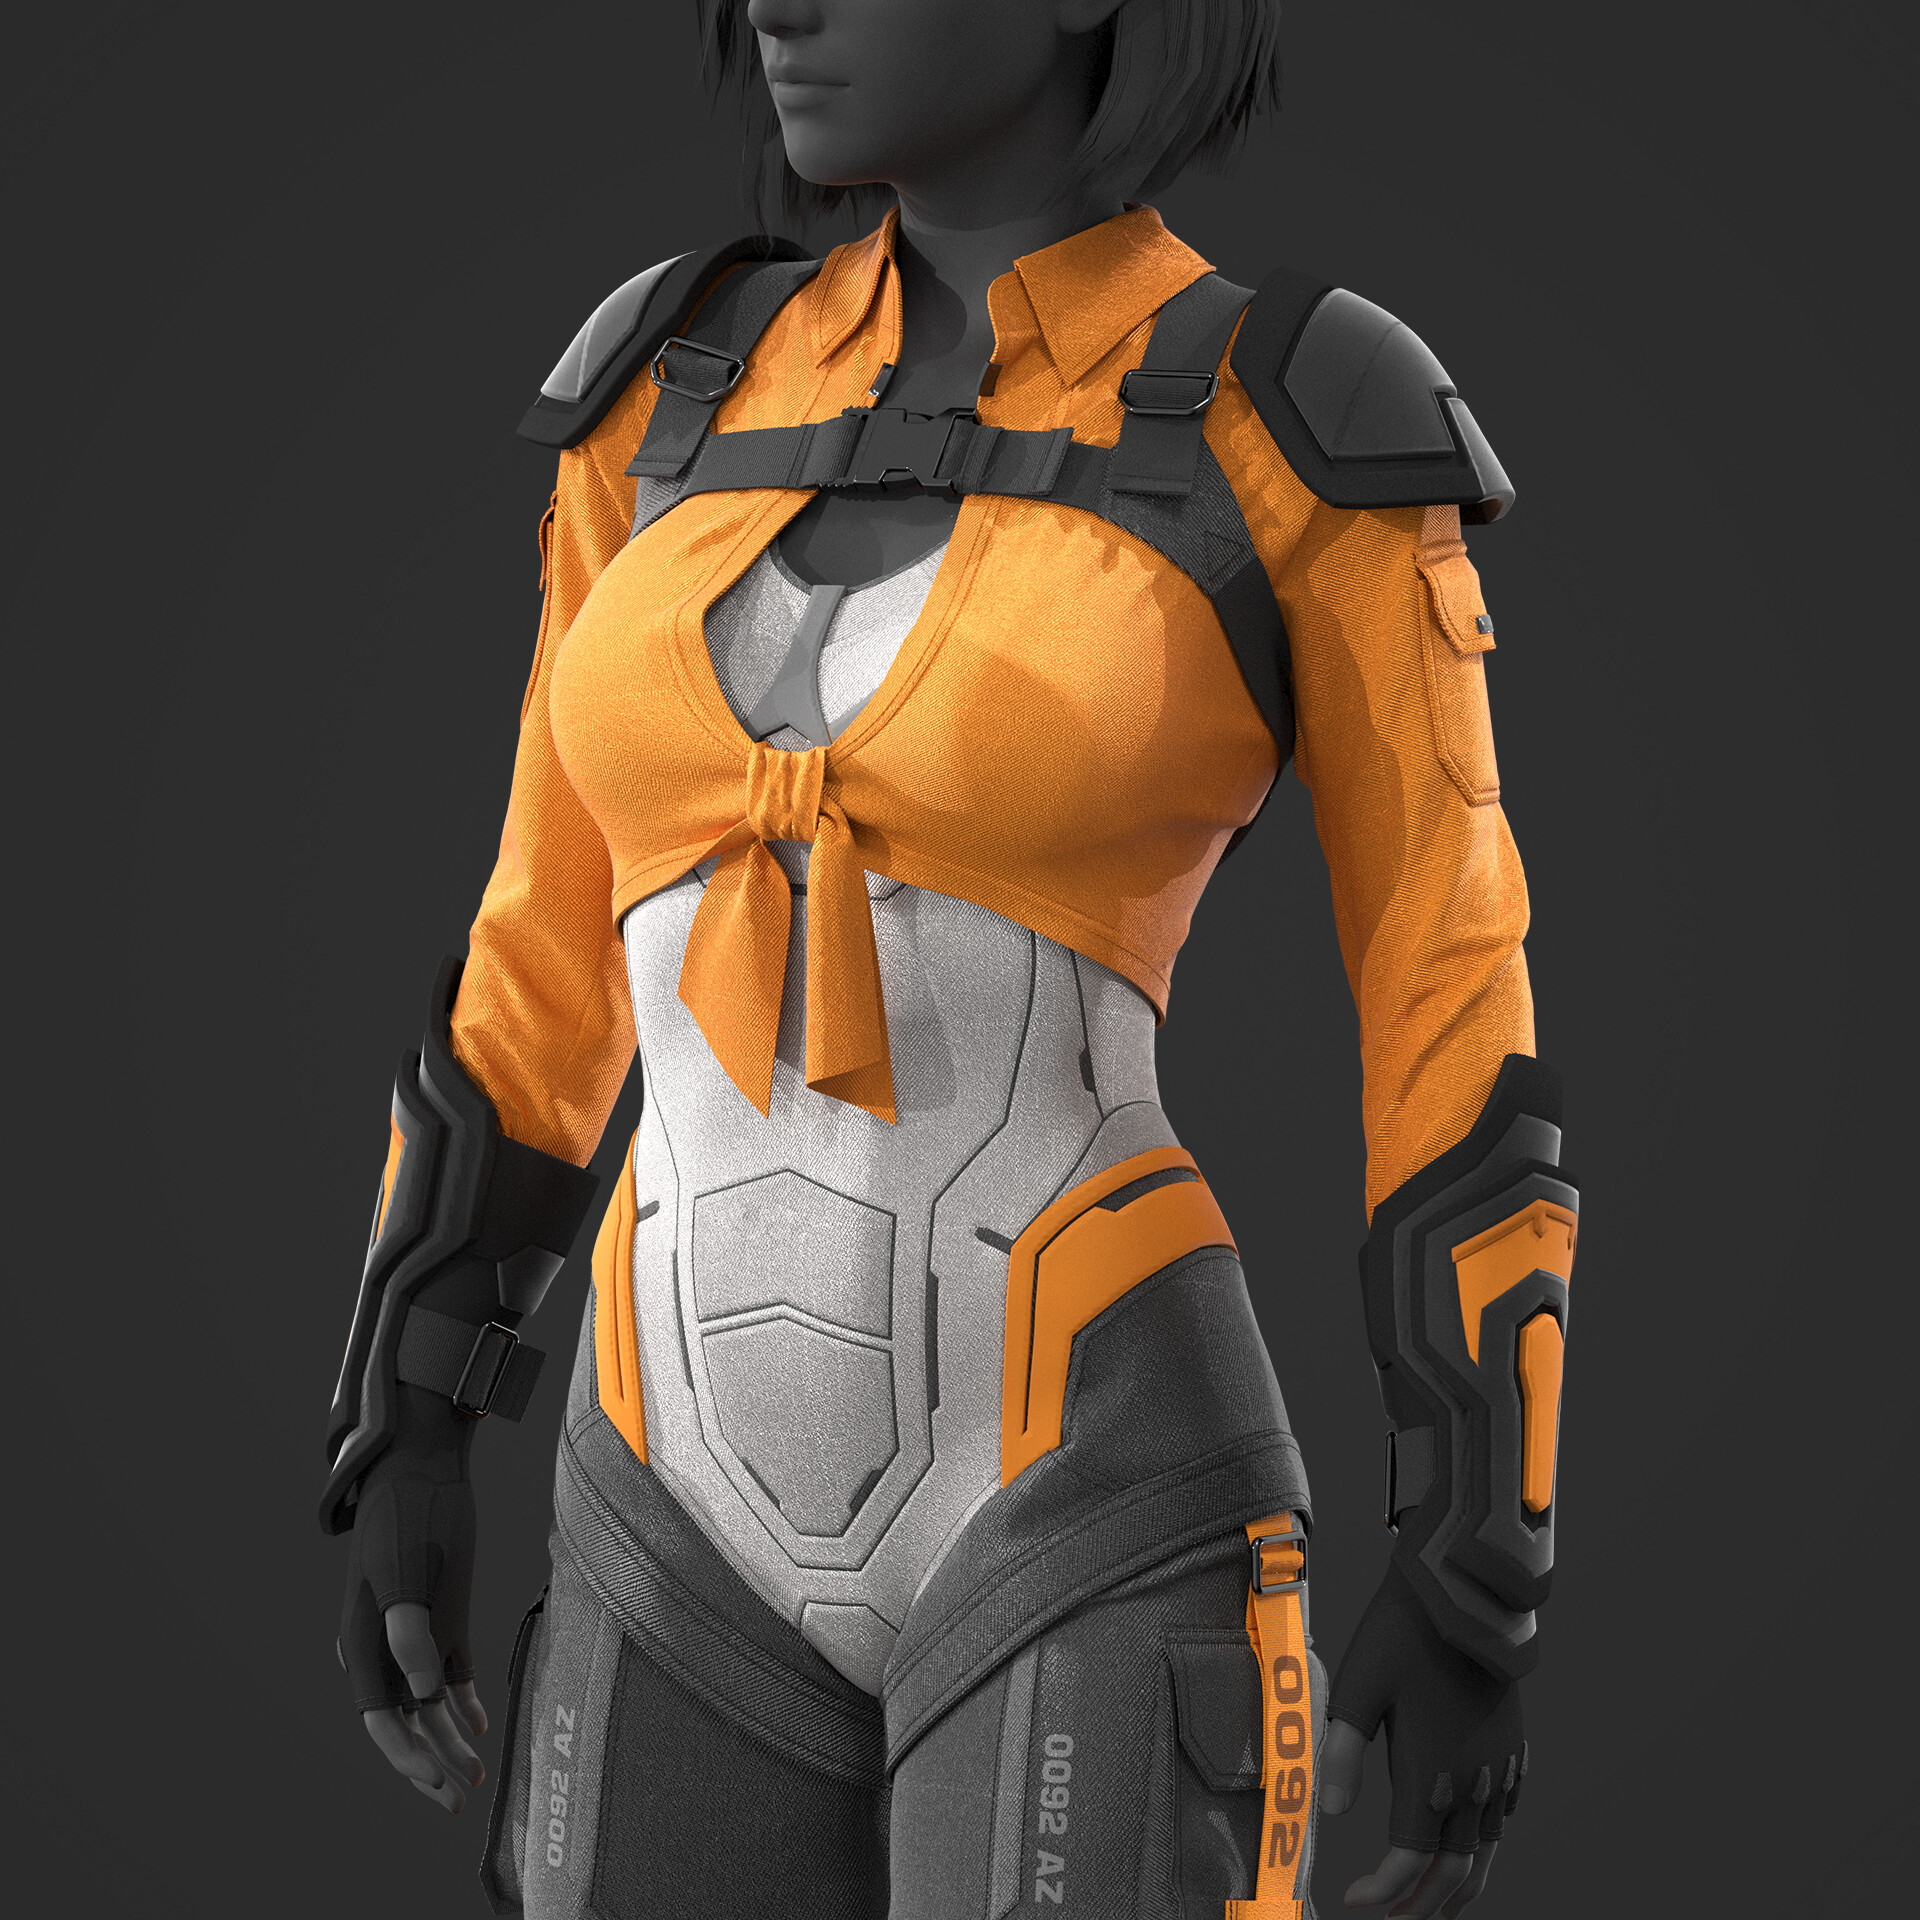 ArtStation - woman wearing futuristic combat suit